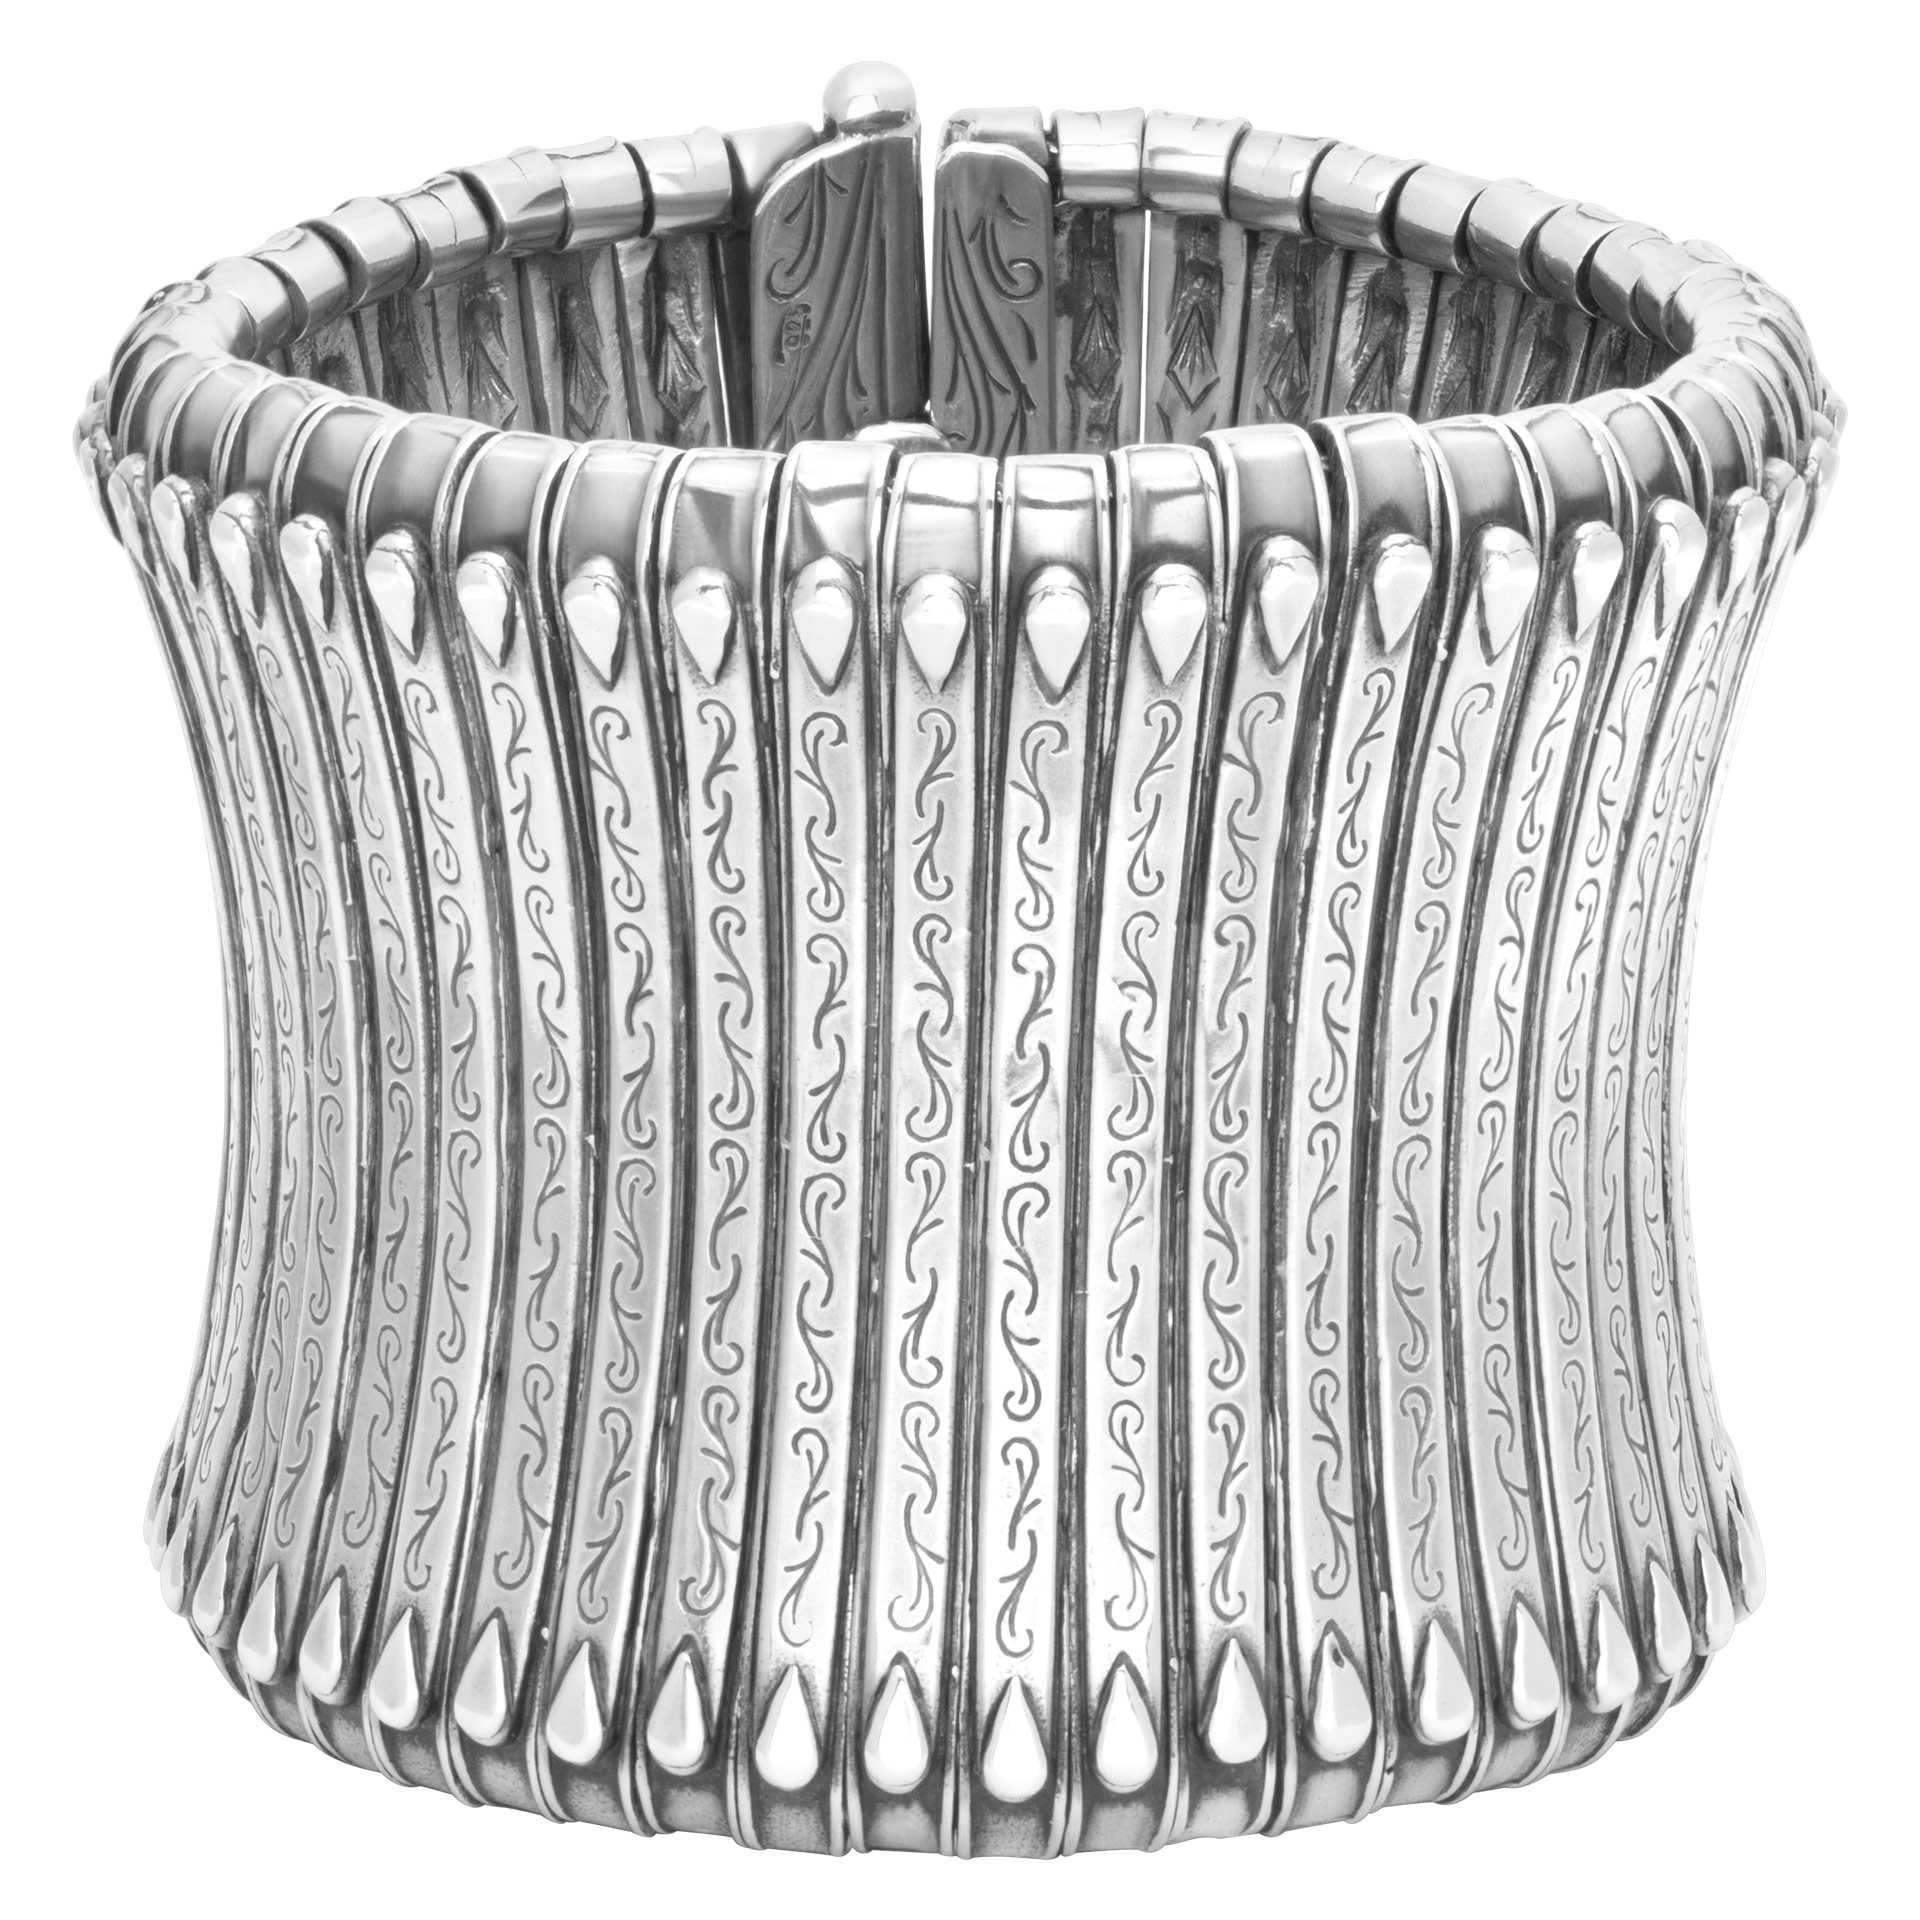 Konstantino Tower cuff bracelet in sterling silver